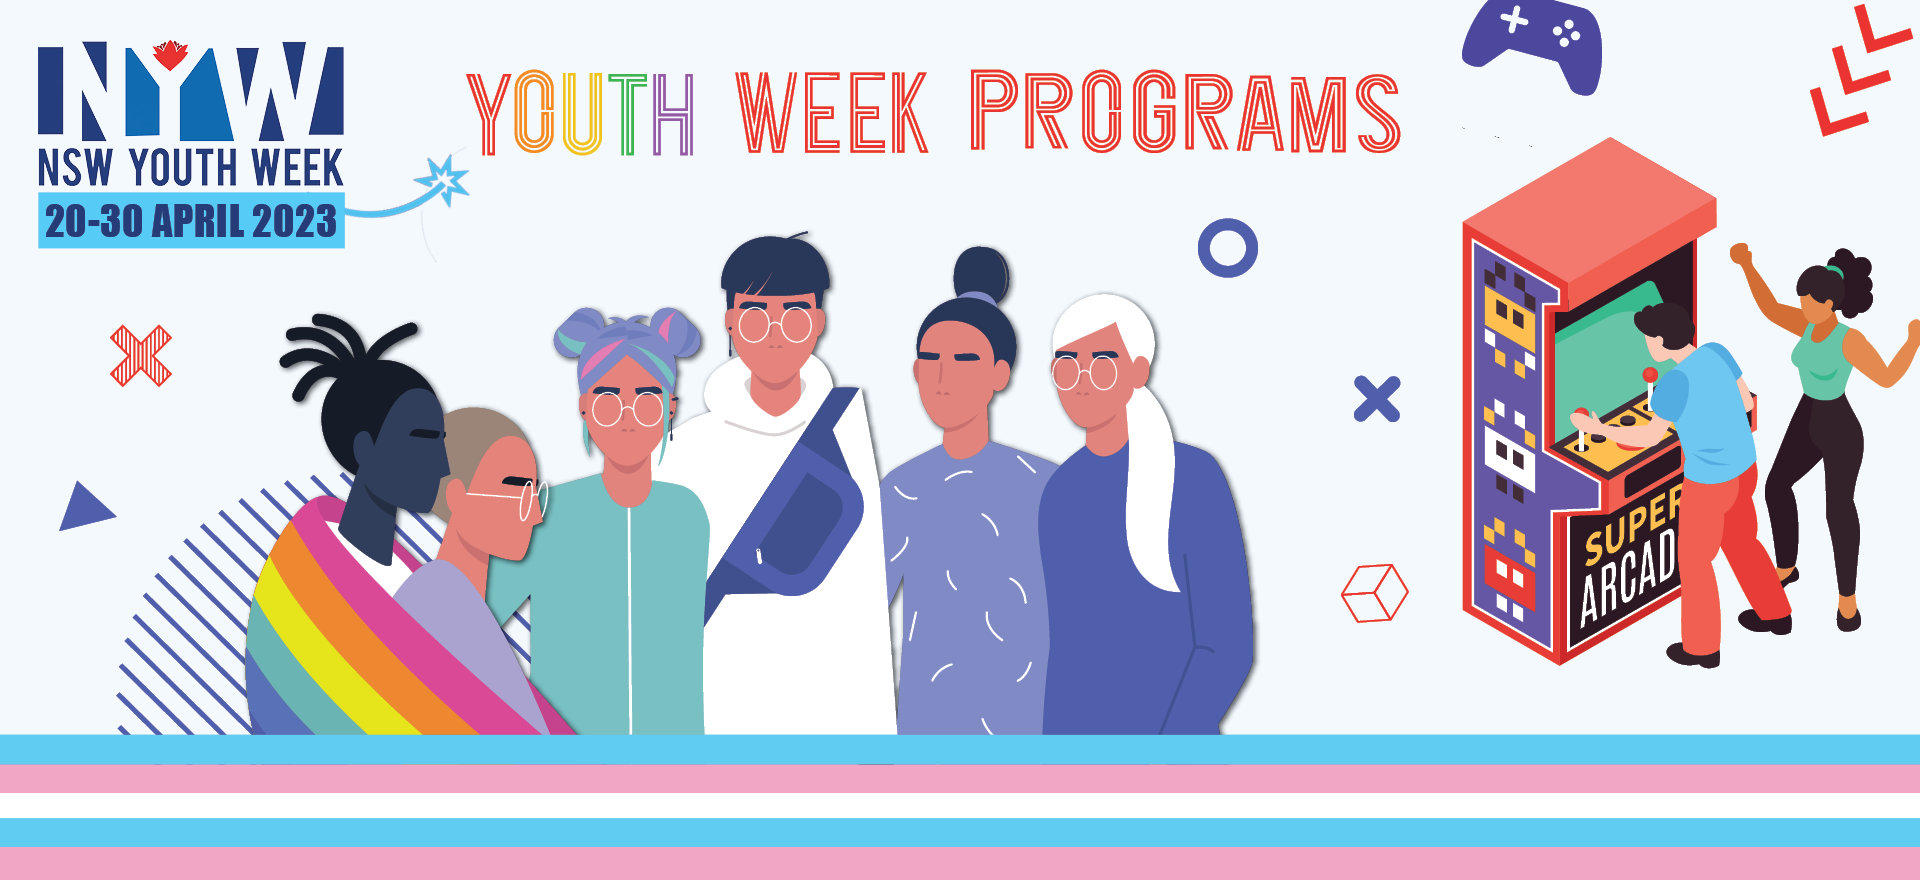 NSW Youth Week Programs 20-30 April 2023